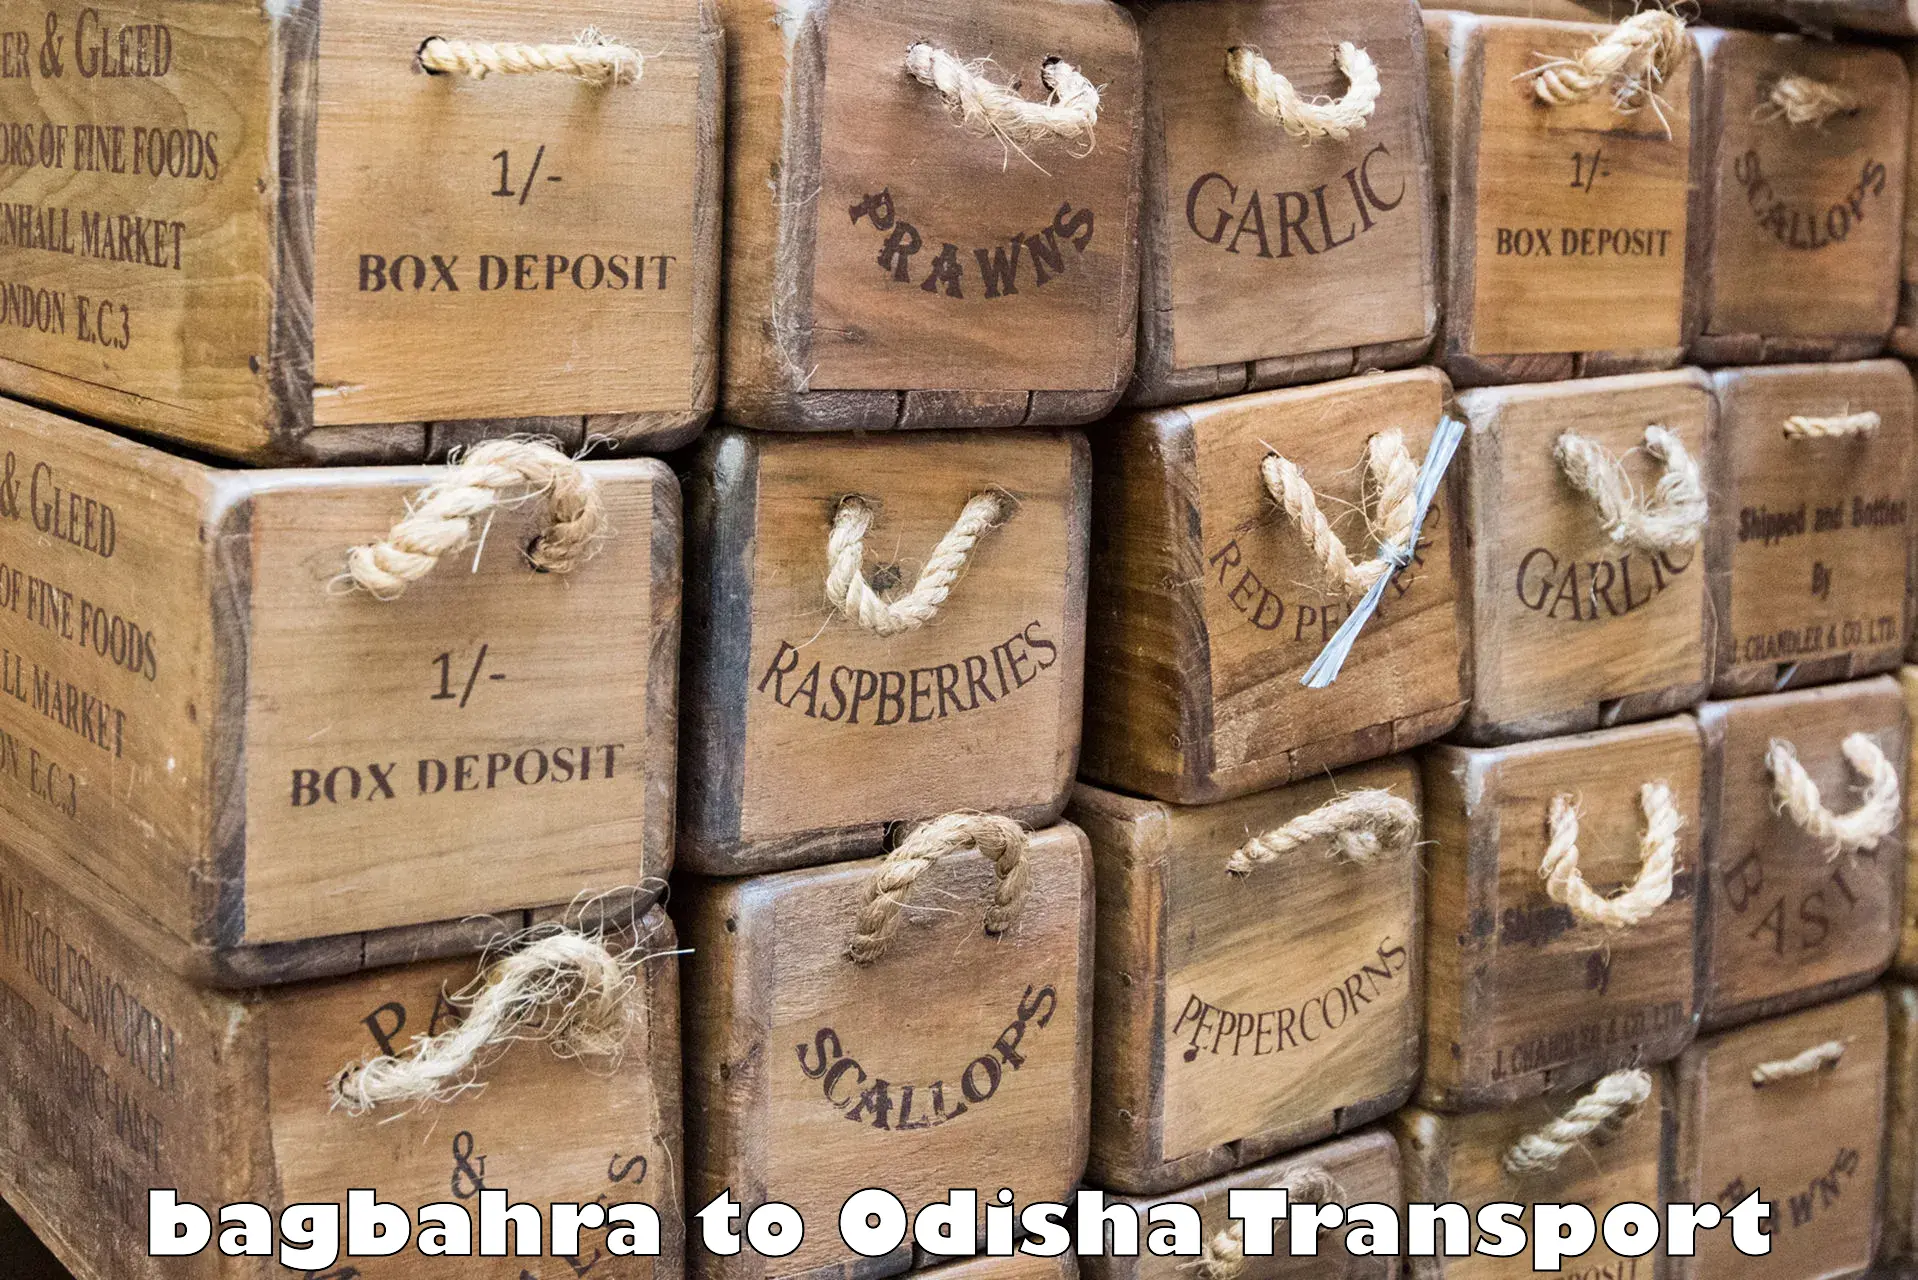 Express transport services bagbahra to Gumadera